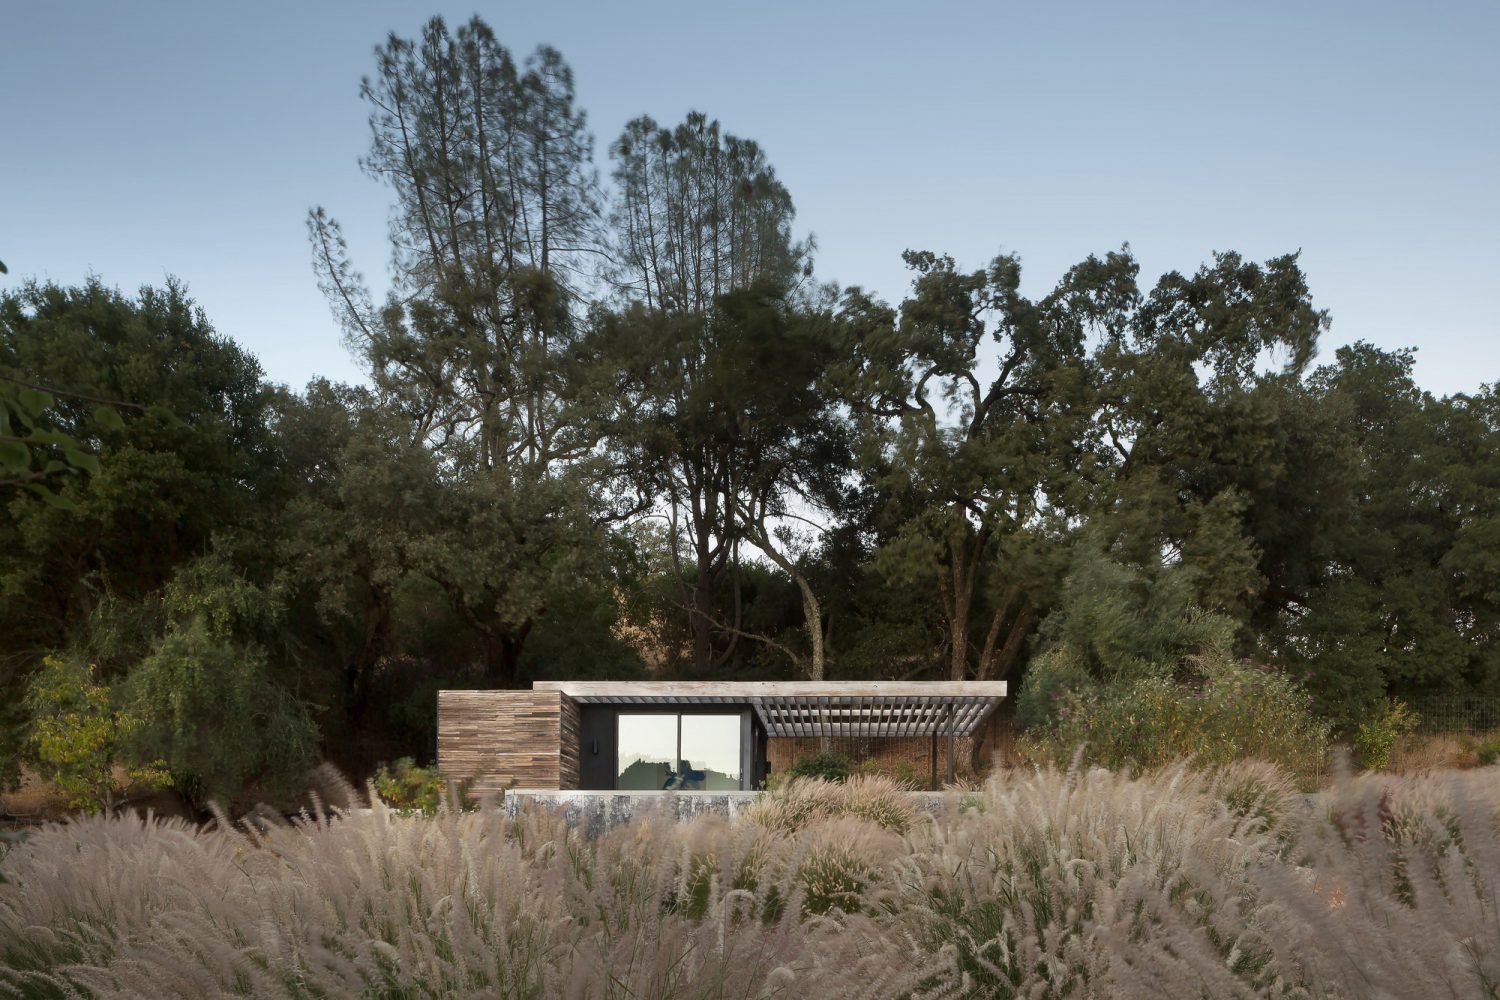 Dry Creek Pool House by Ro Rockett Design